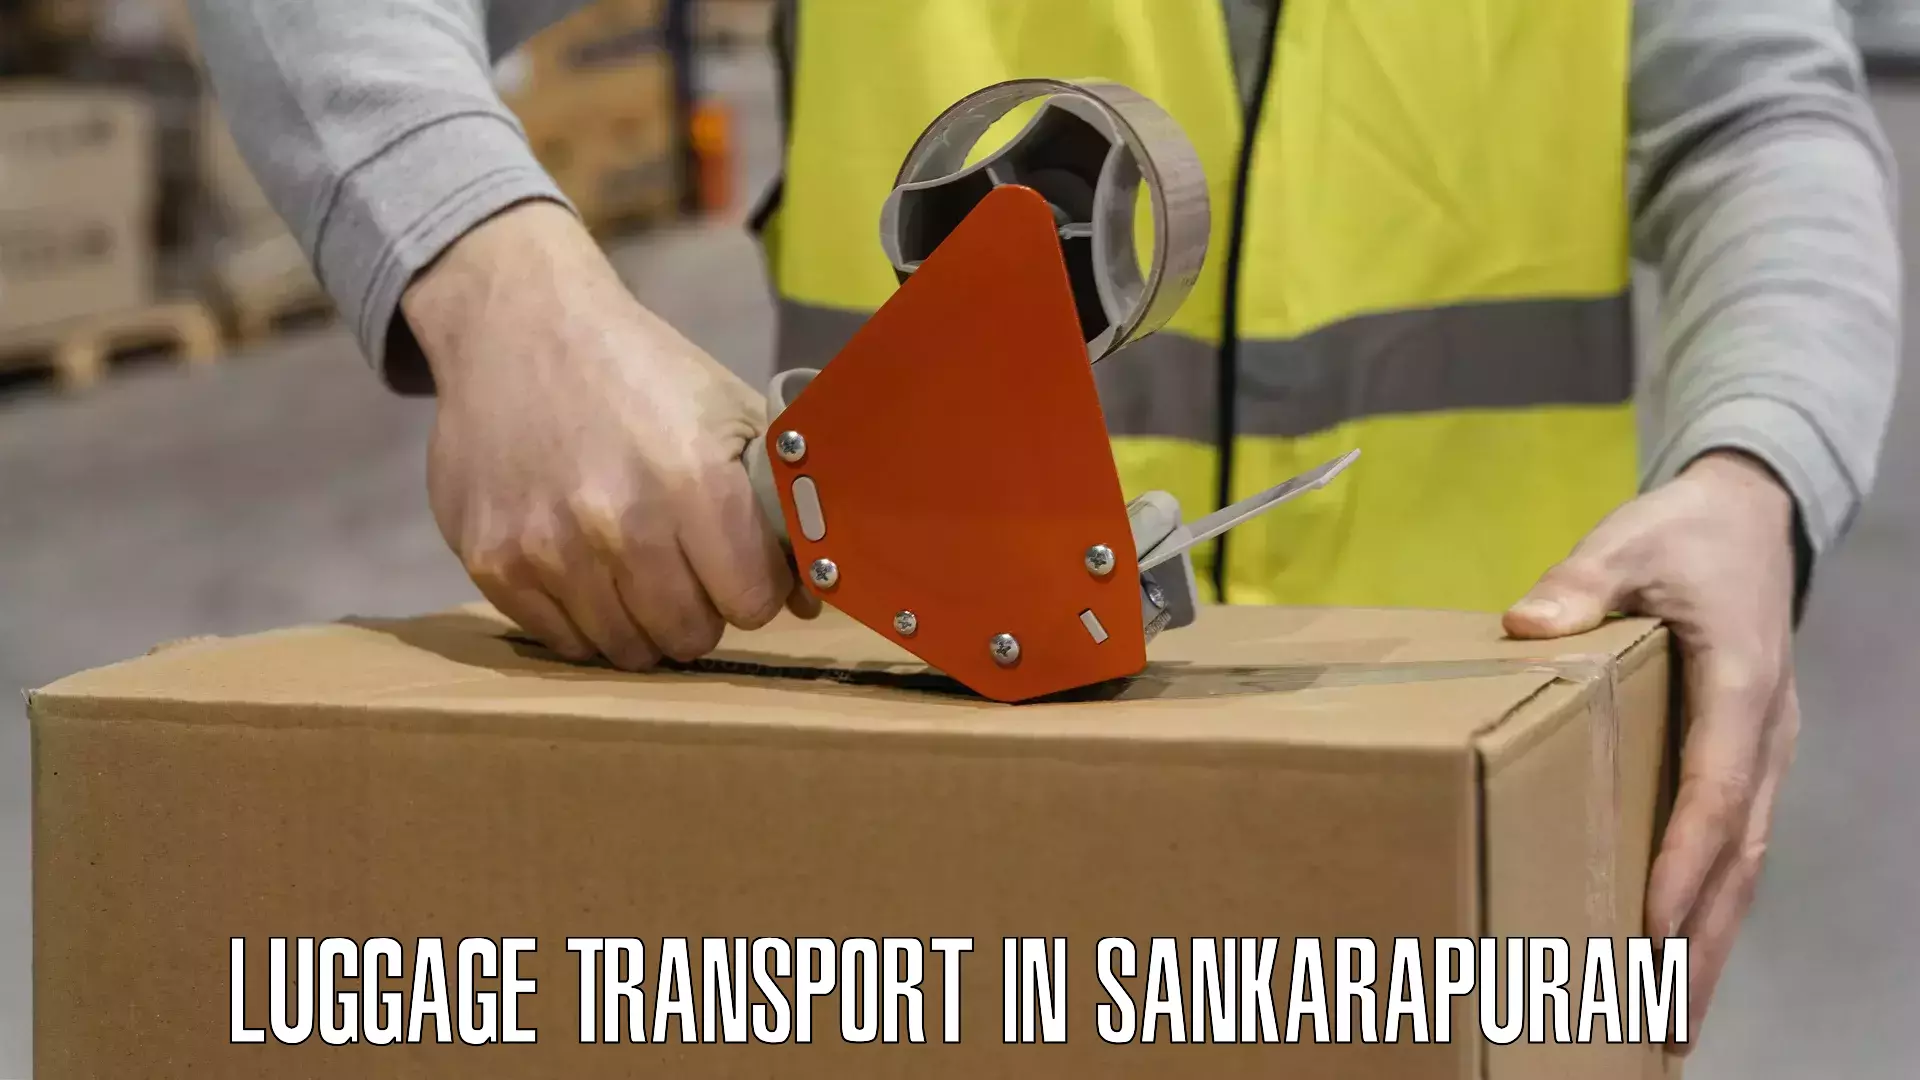 Luggage delivery news in Sankarapuram